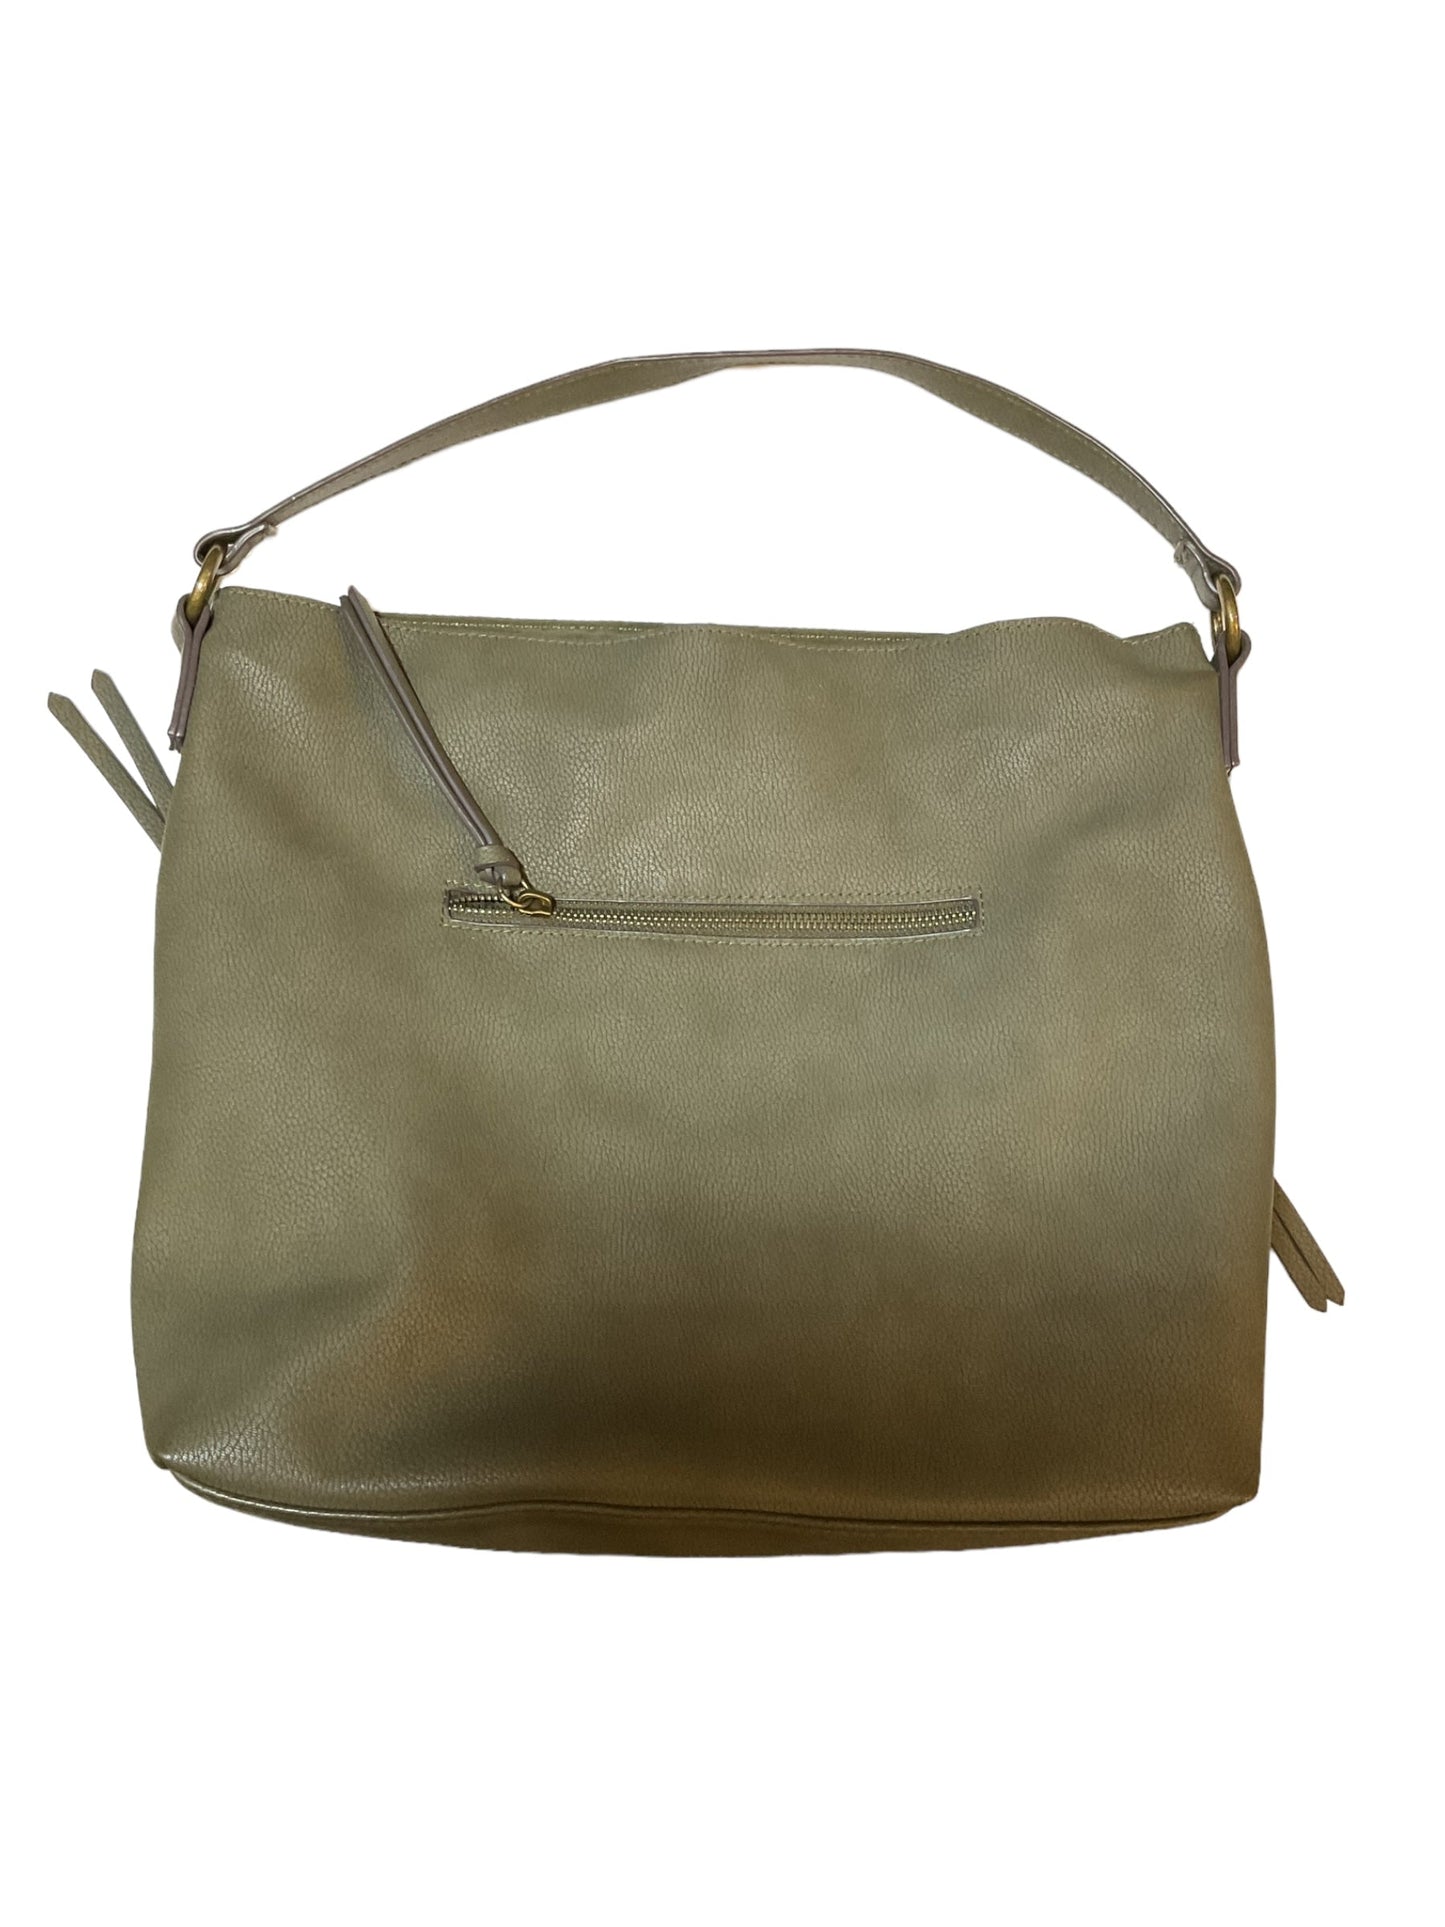 Handbag By Sonoma  Size: Medium